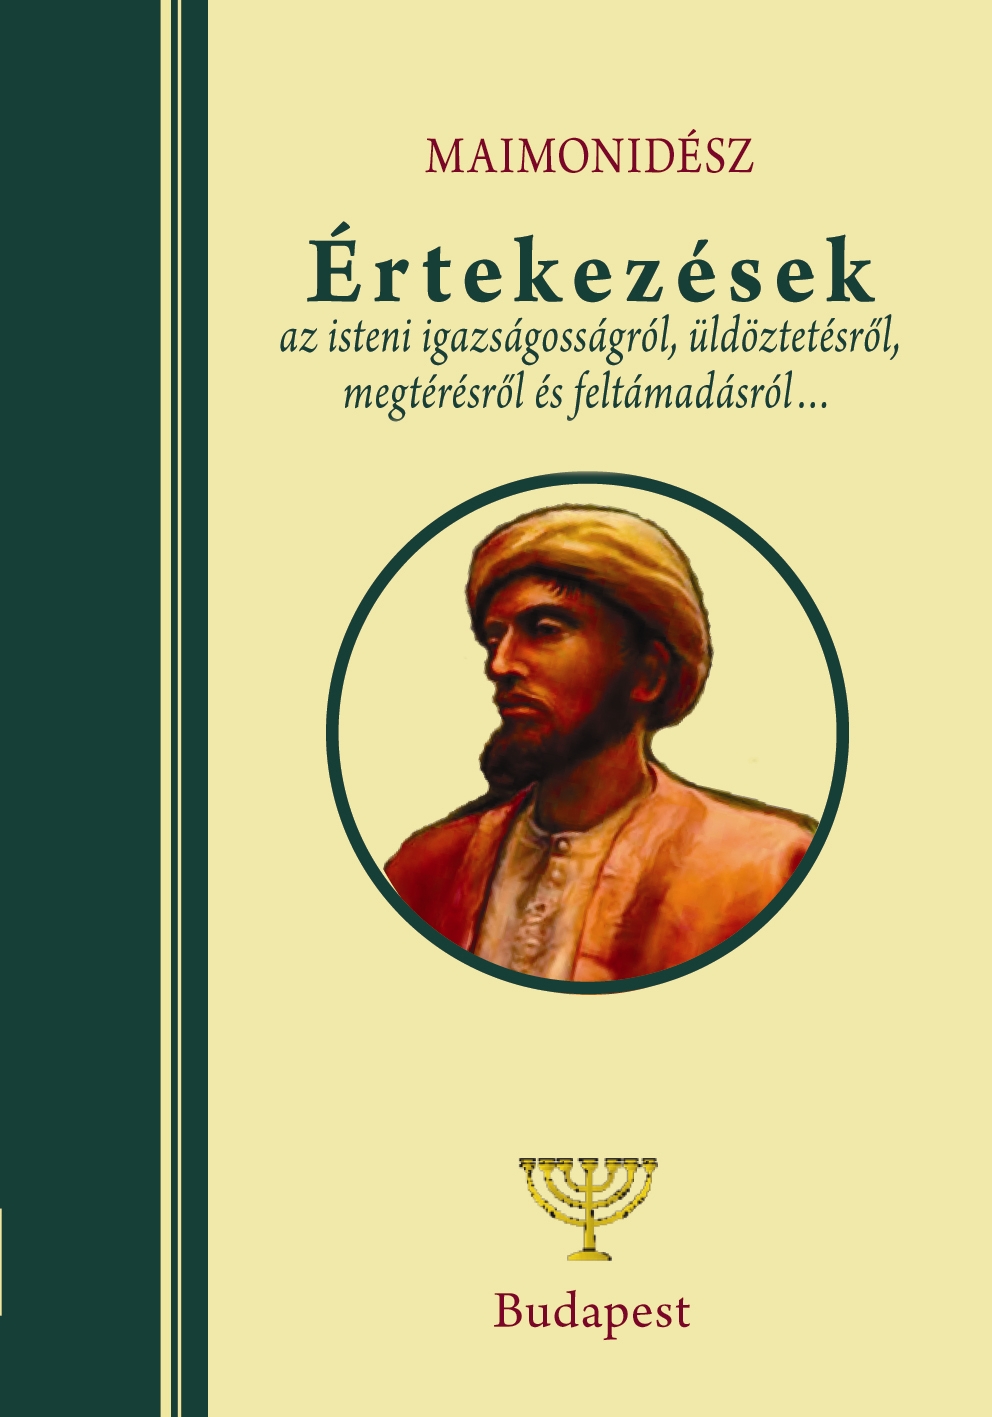 Maimonidész magyarul